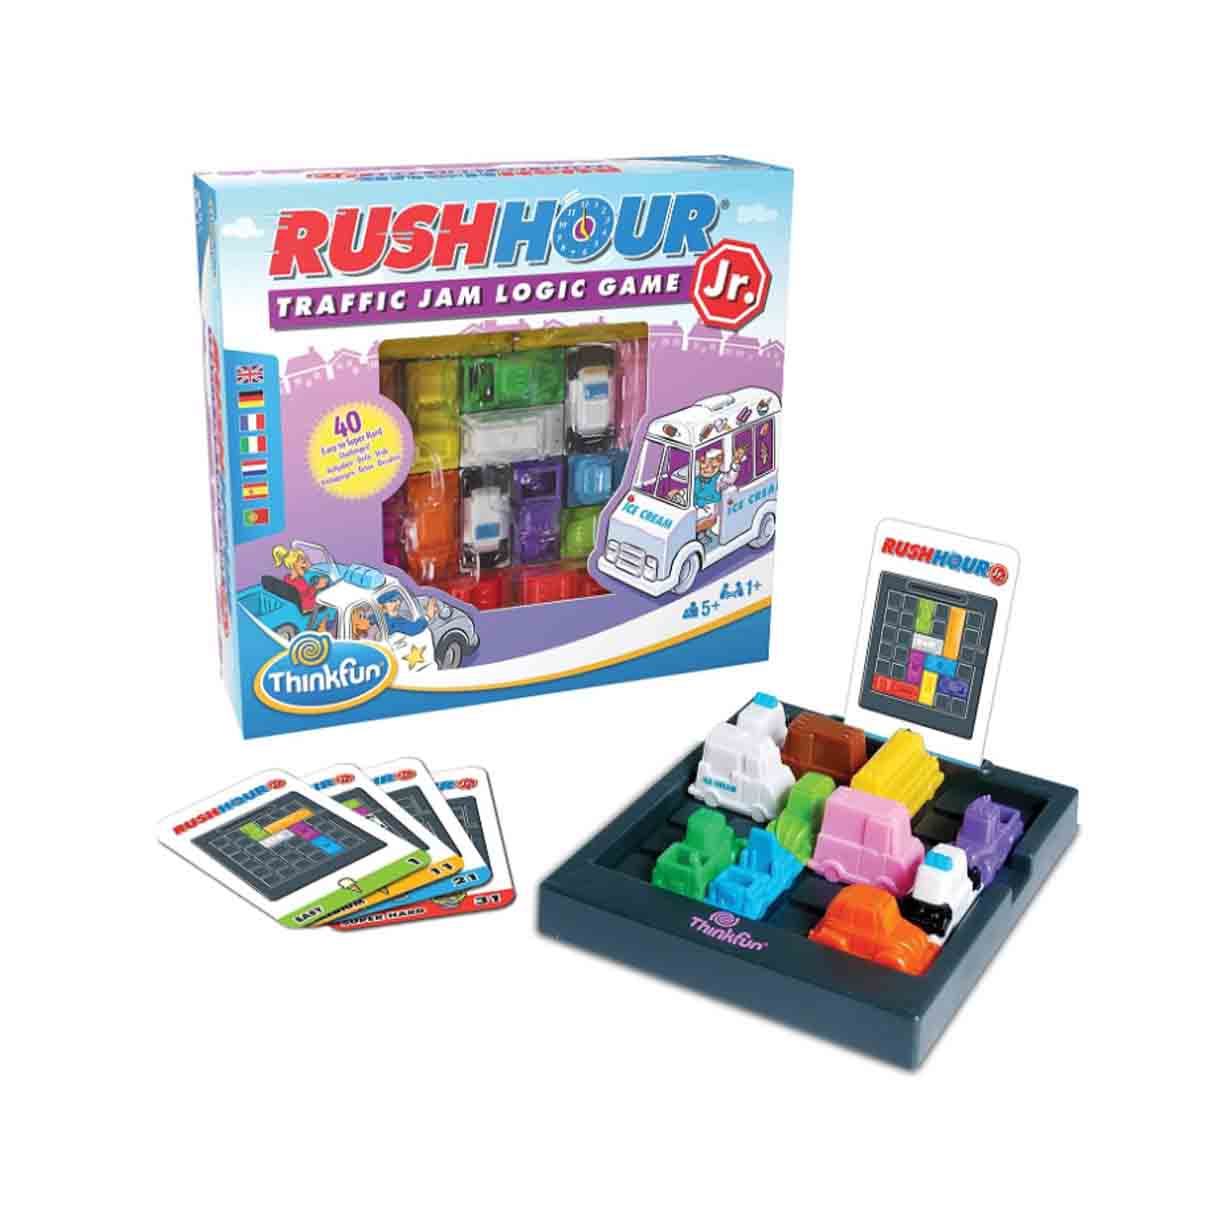 thinkfun rush hour junior logic game  (ravensburger - 76437 )